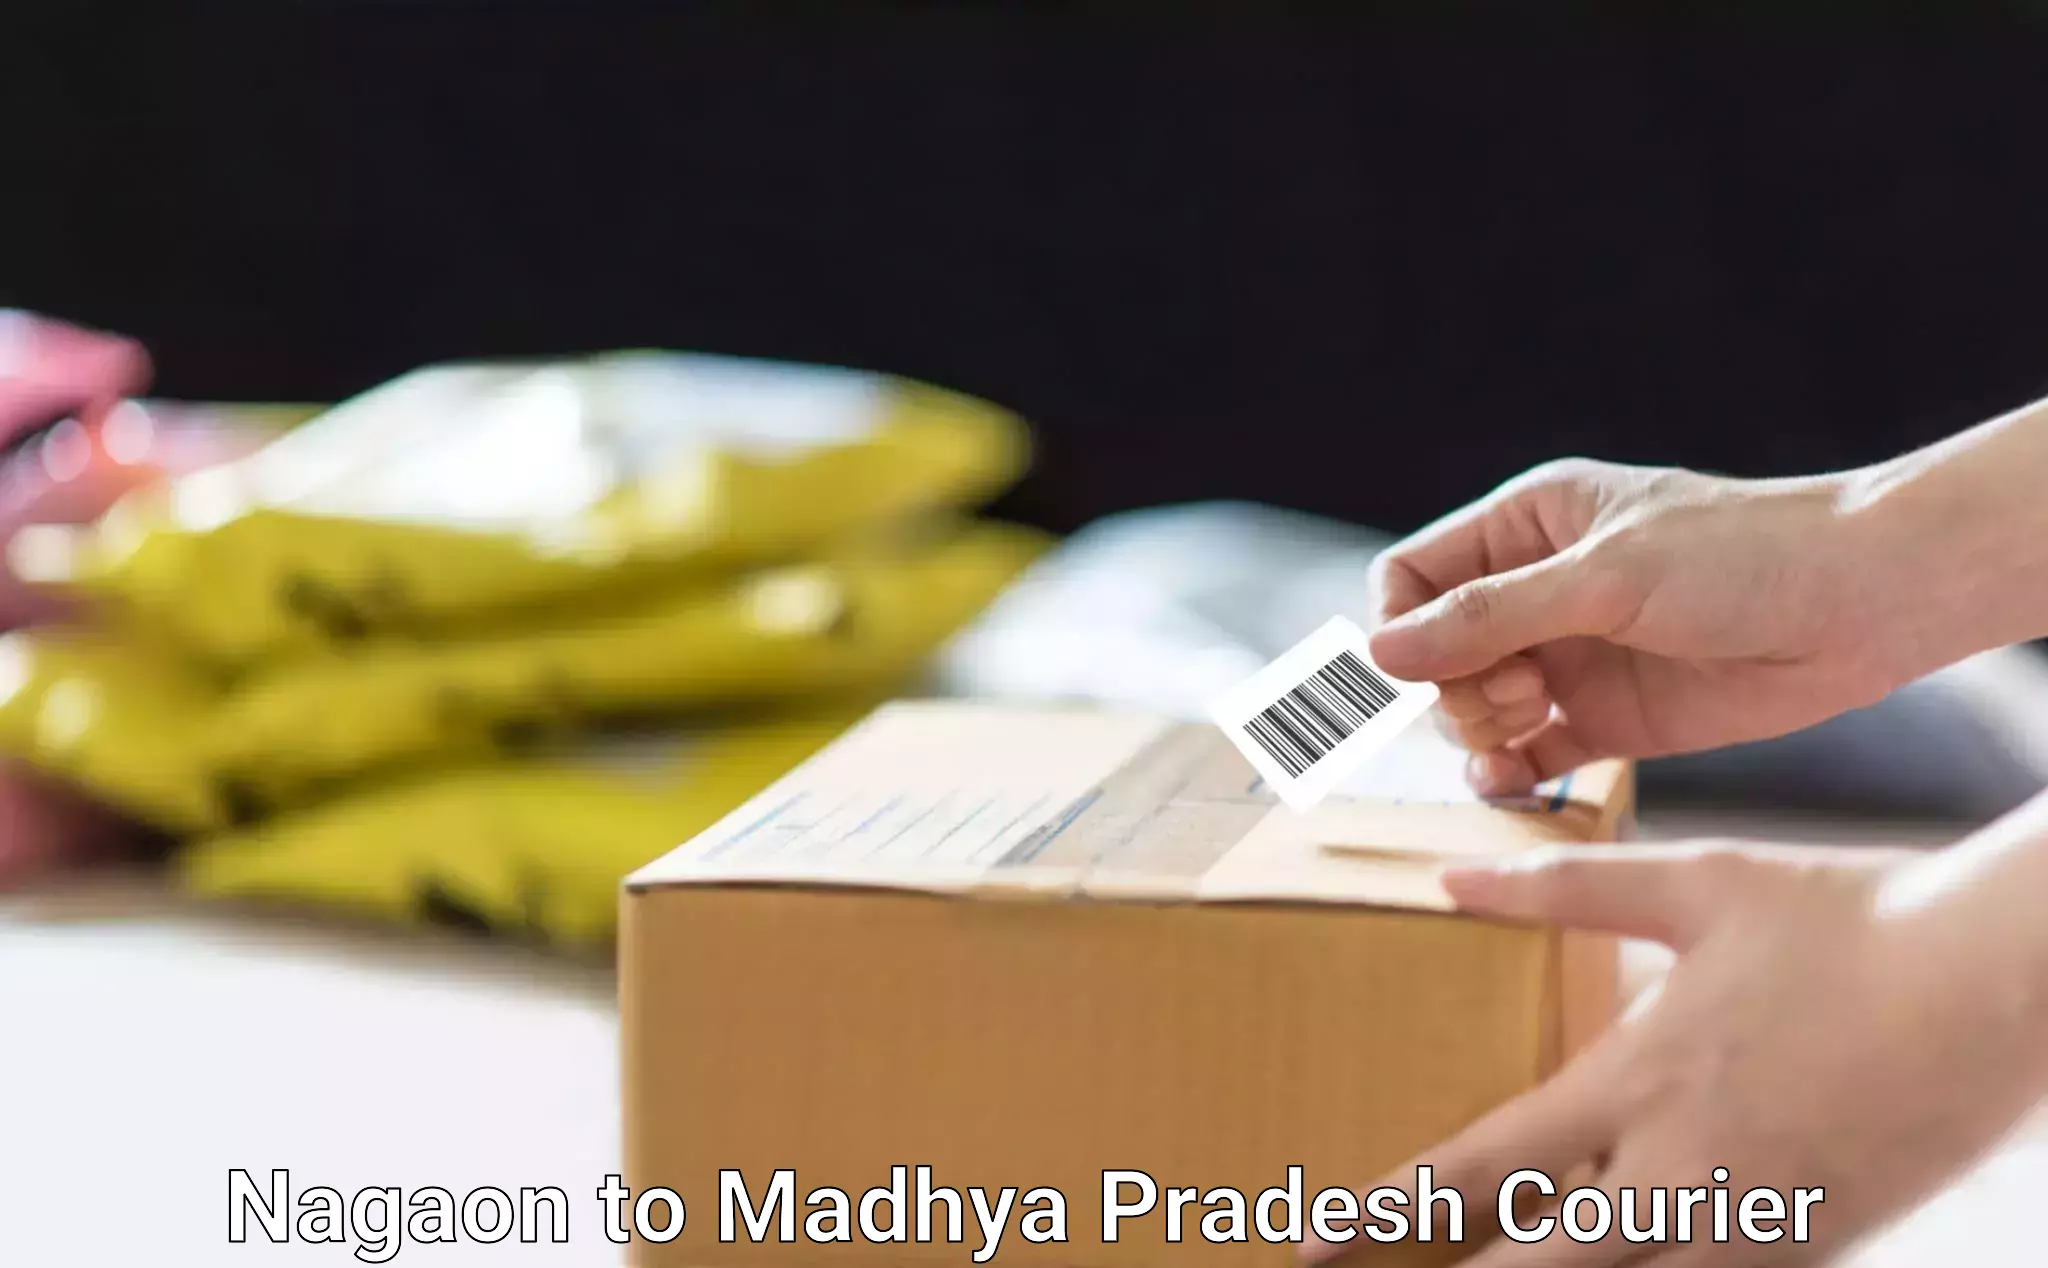 Global courier networks Nagaon to Madhya Pradesh